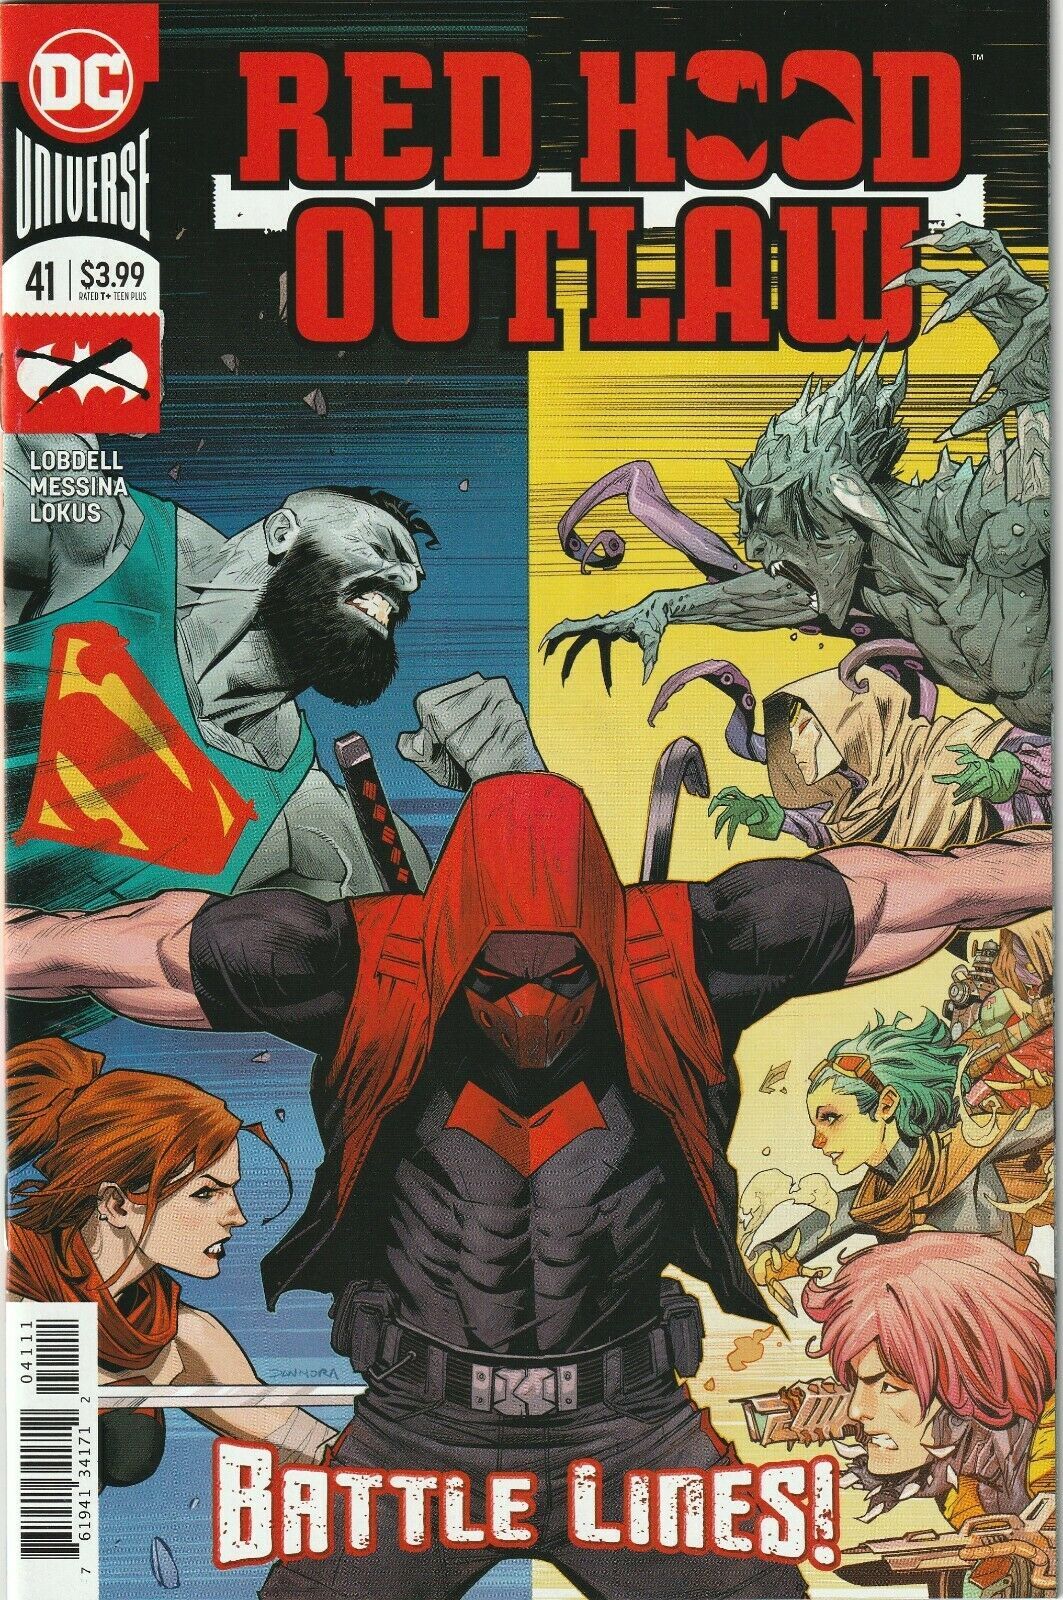 Red Hood Outlaw # 41 Cover A NM | Comic Books - Age, DC Comics, Superhero / HipComic